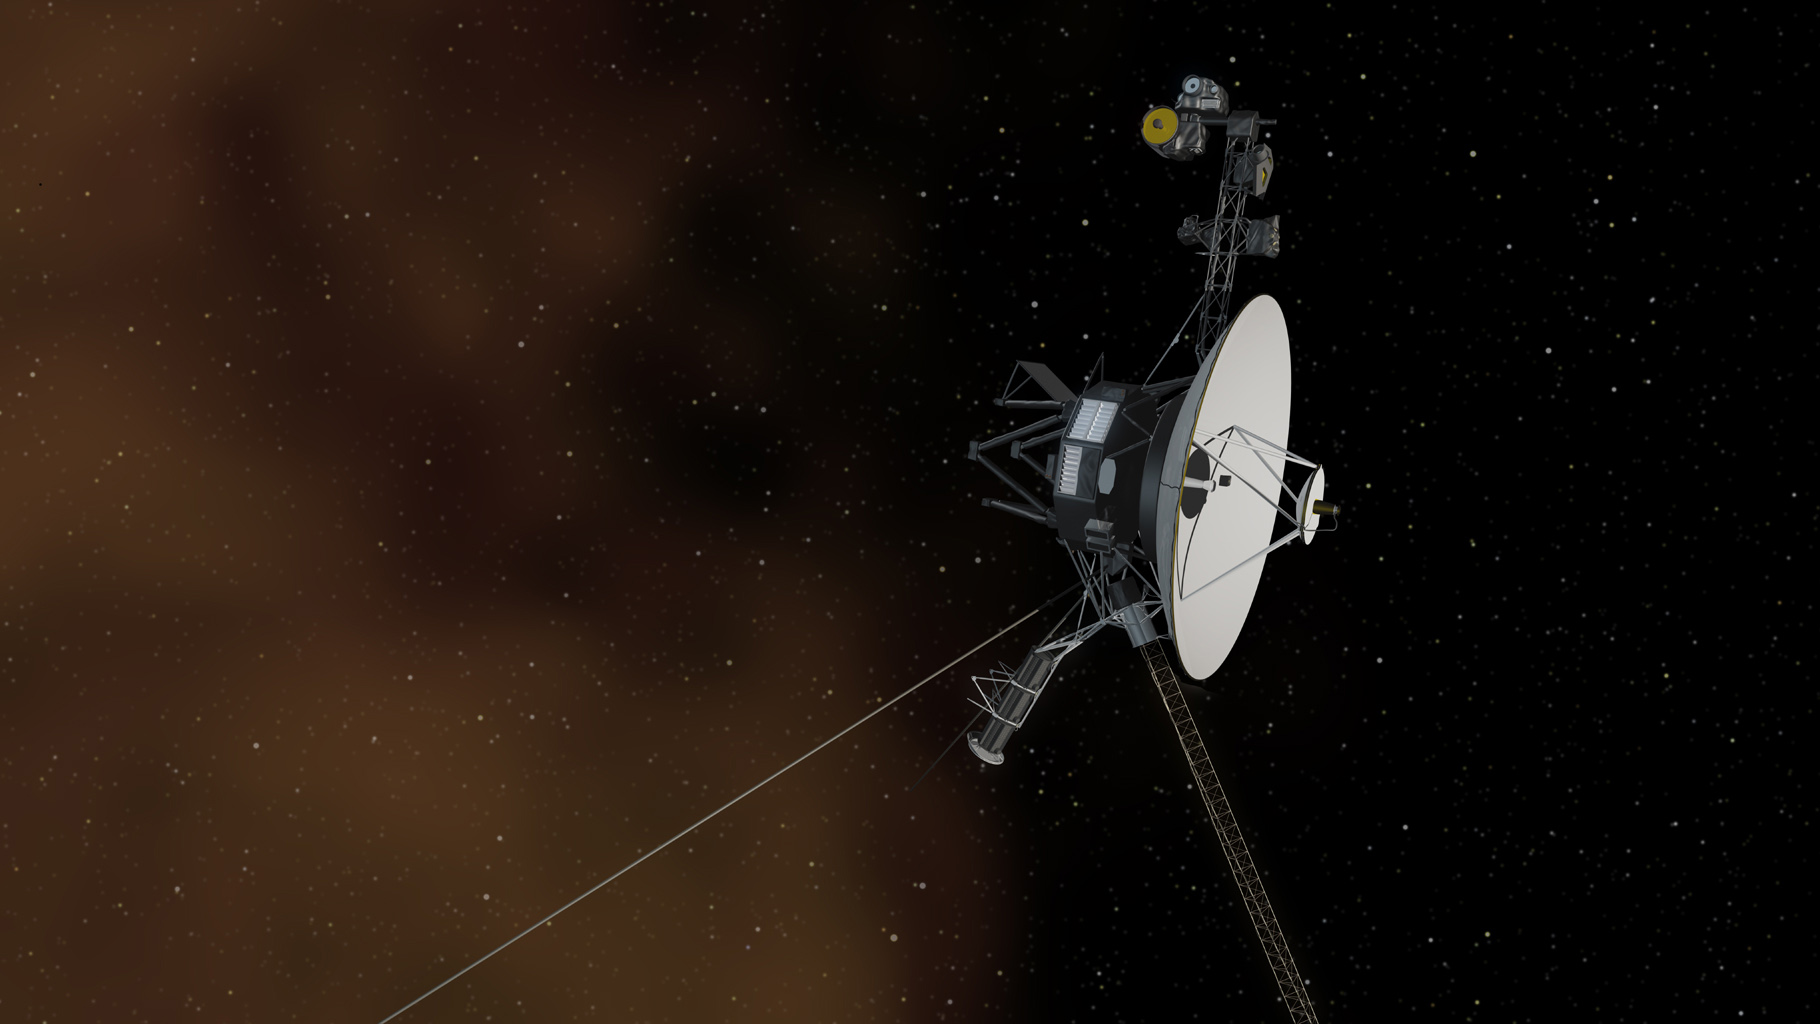 Artist's rendering of Voyager 1